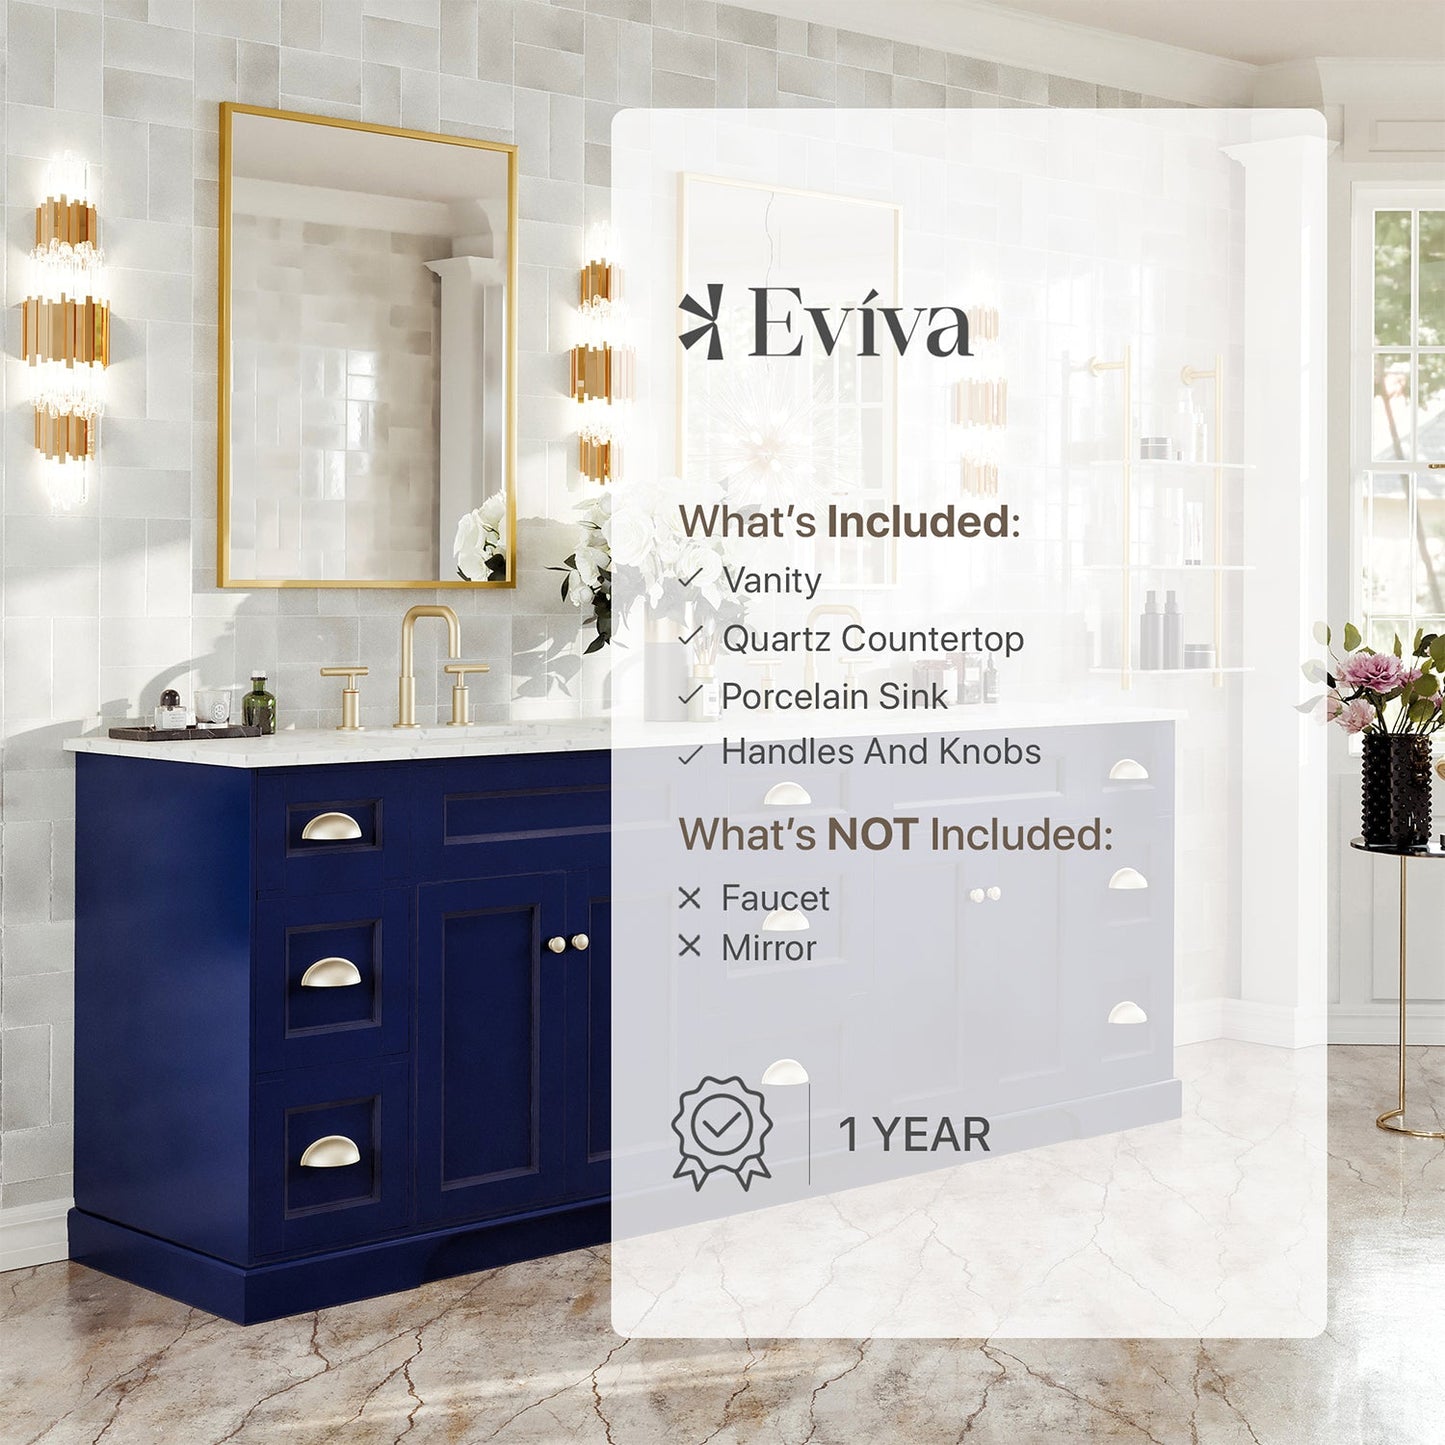 Epic 84"W x 22"D Blue Double Sink Bathroom Vanity with Carrara Quartz Countertop and Undermount Porcelain Sink